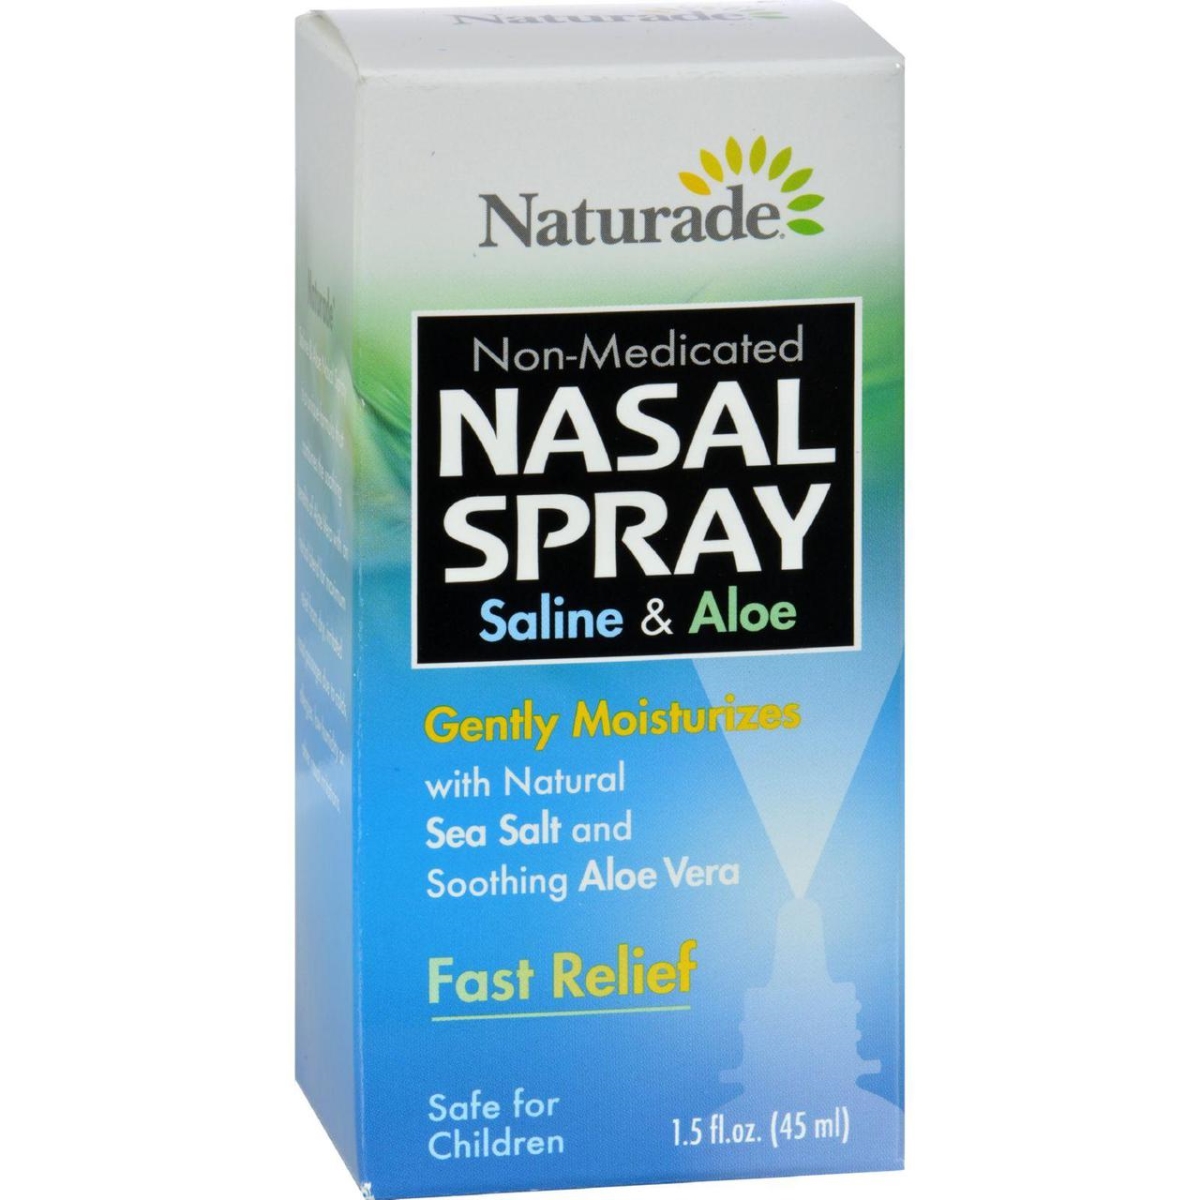 Hg0313247 1.5 Fl Oz Nasal Spray Saline & Aloe